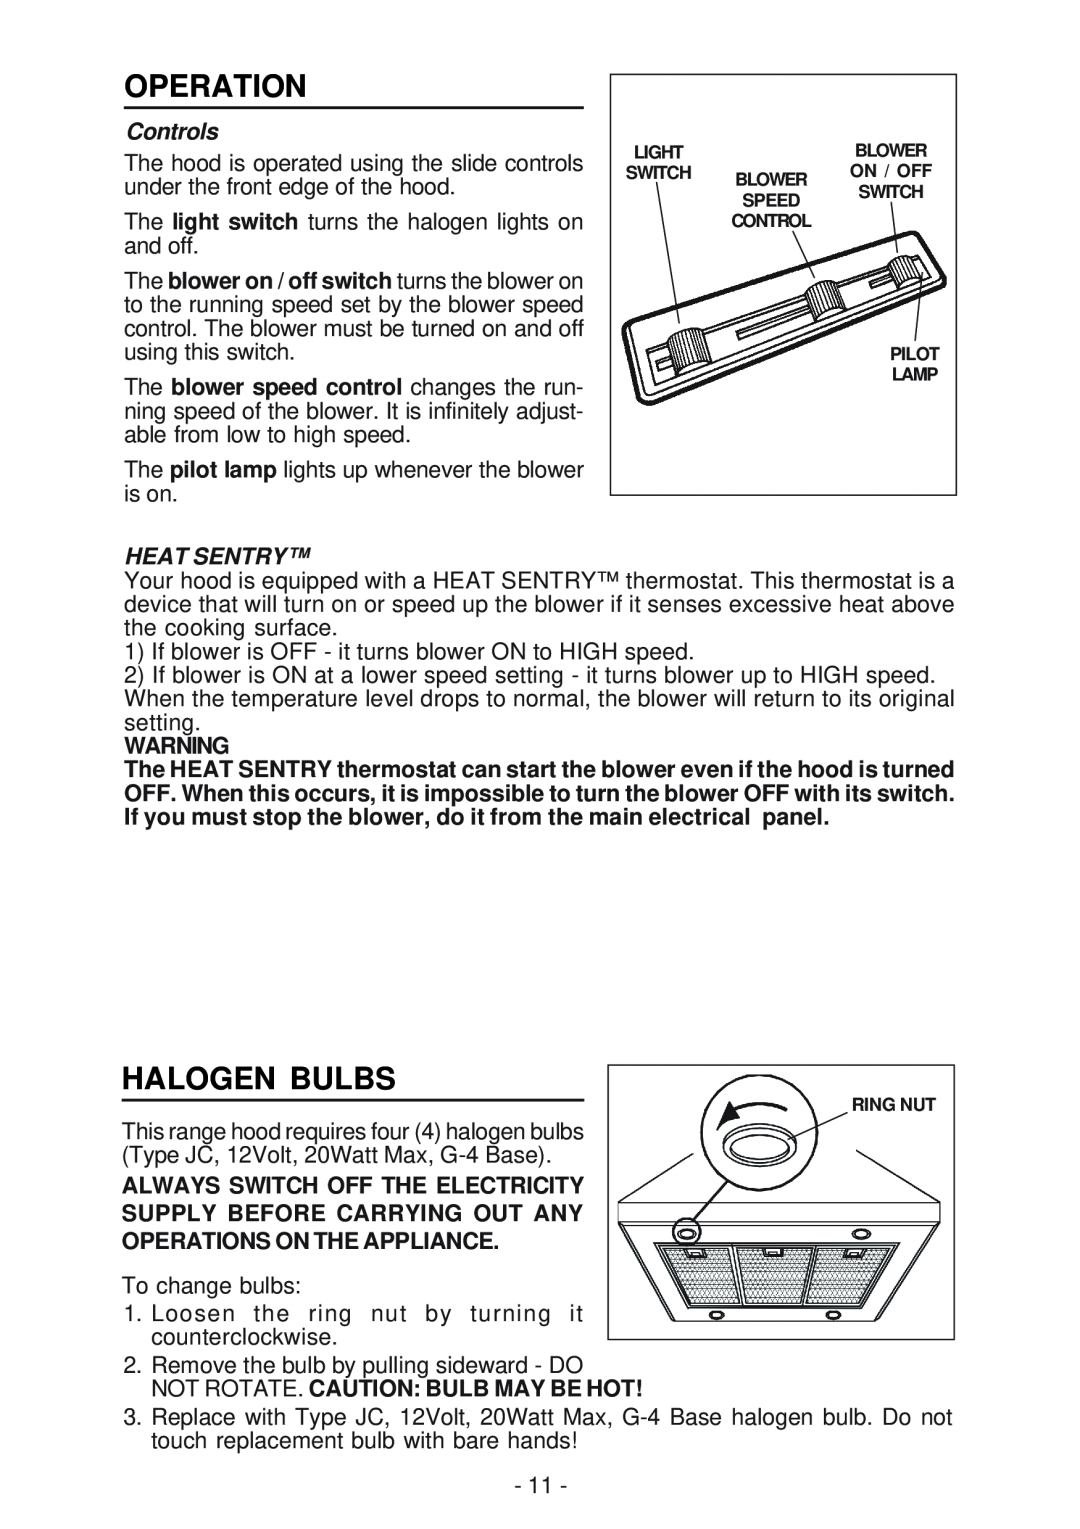 Broan 63000EX manual Operation, Halogen Bulbs, Controls, Heat Sentry 